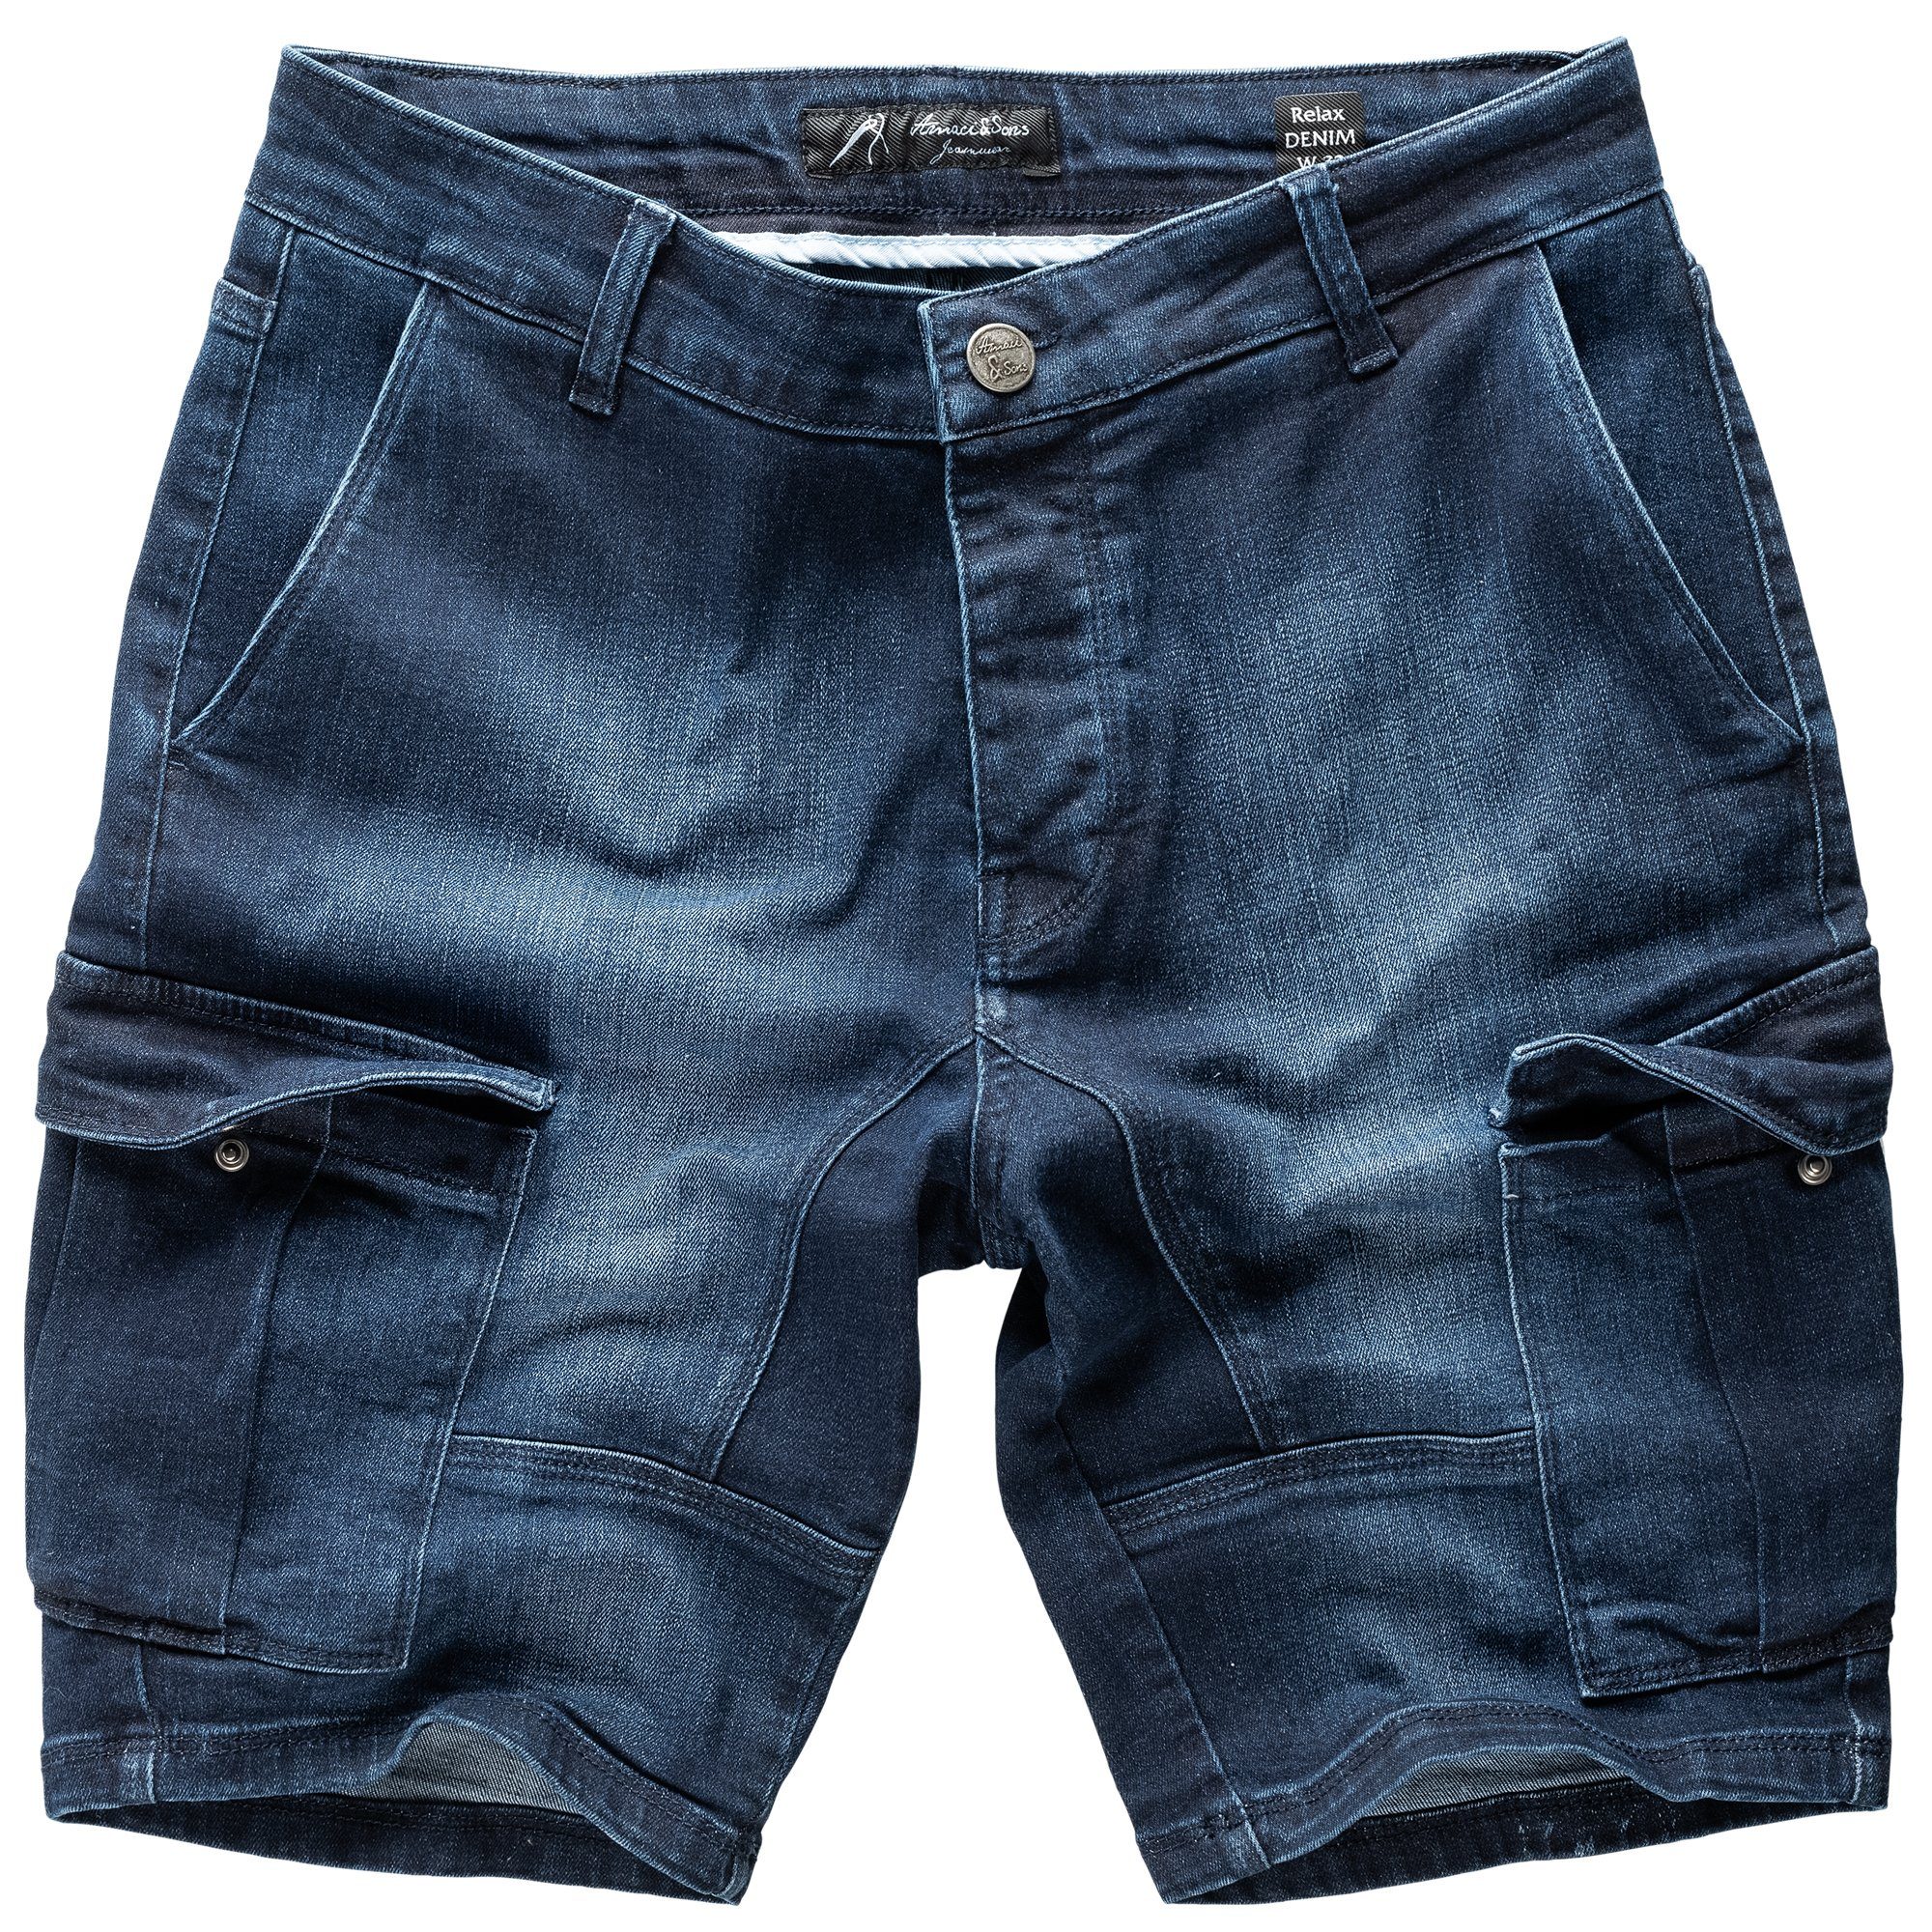 Amaci&Sons Jeansshorts SAN DIEGO Destroyed Jeans Shorts Dunkelblau (798)